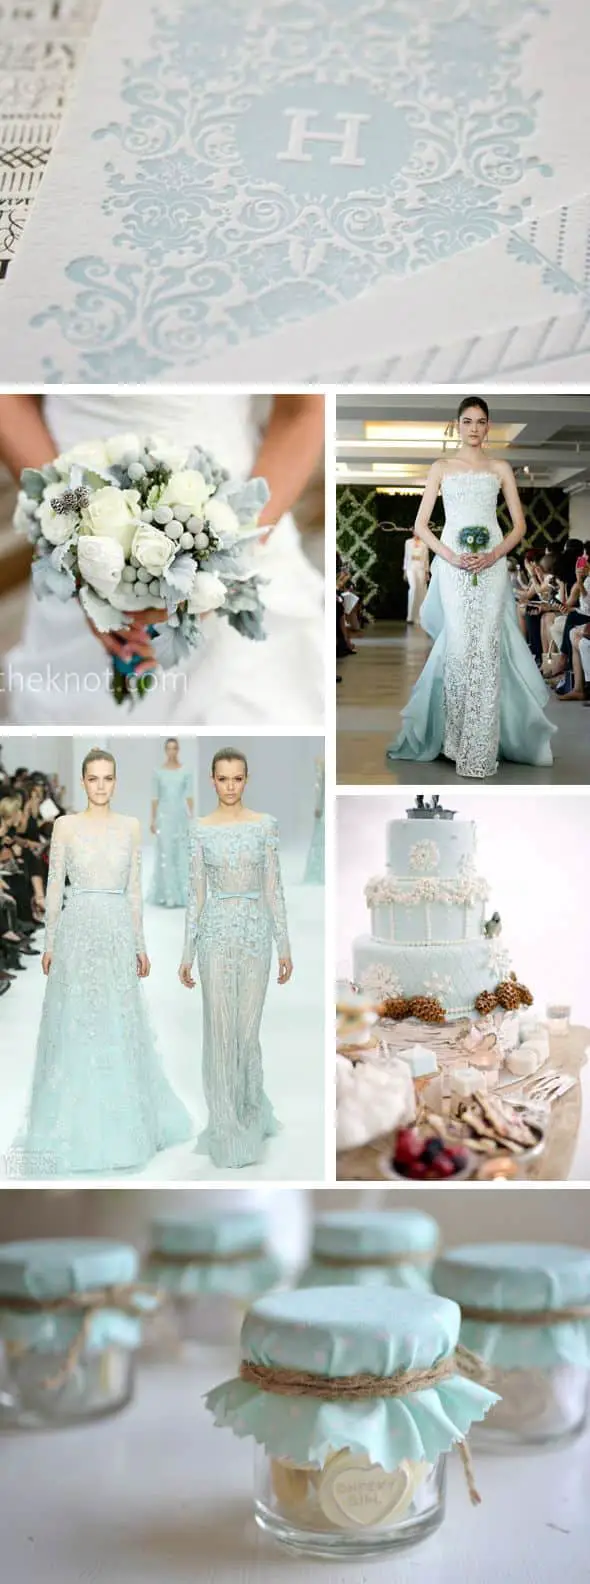 blue-white-winter-wedding-decoration19